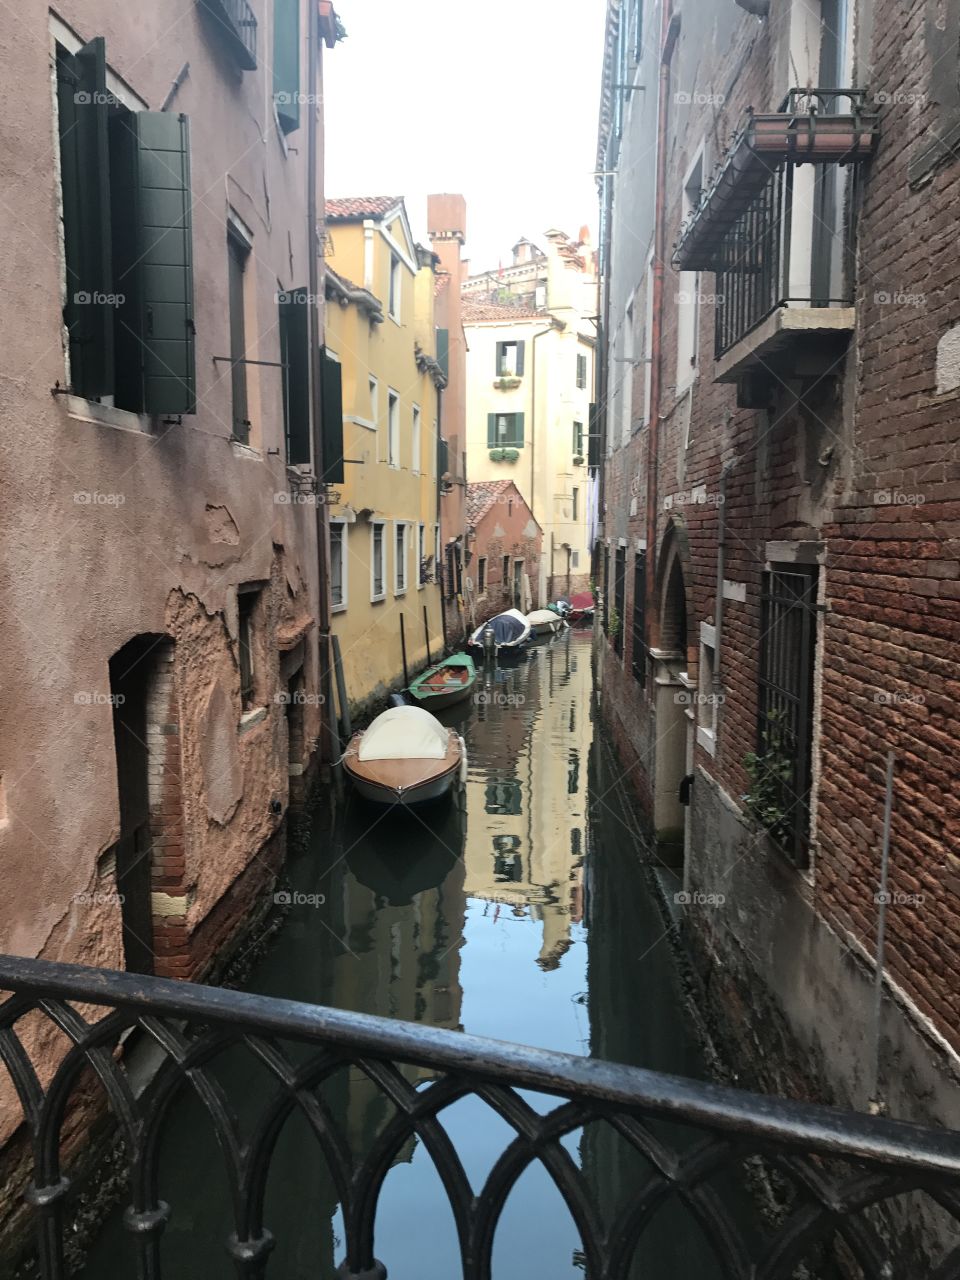 Just off the bridge, Venice Canals!